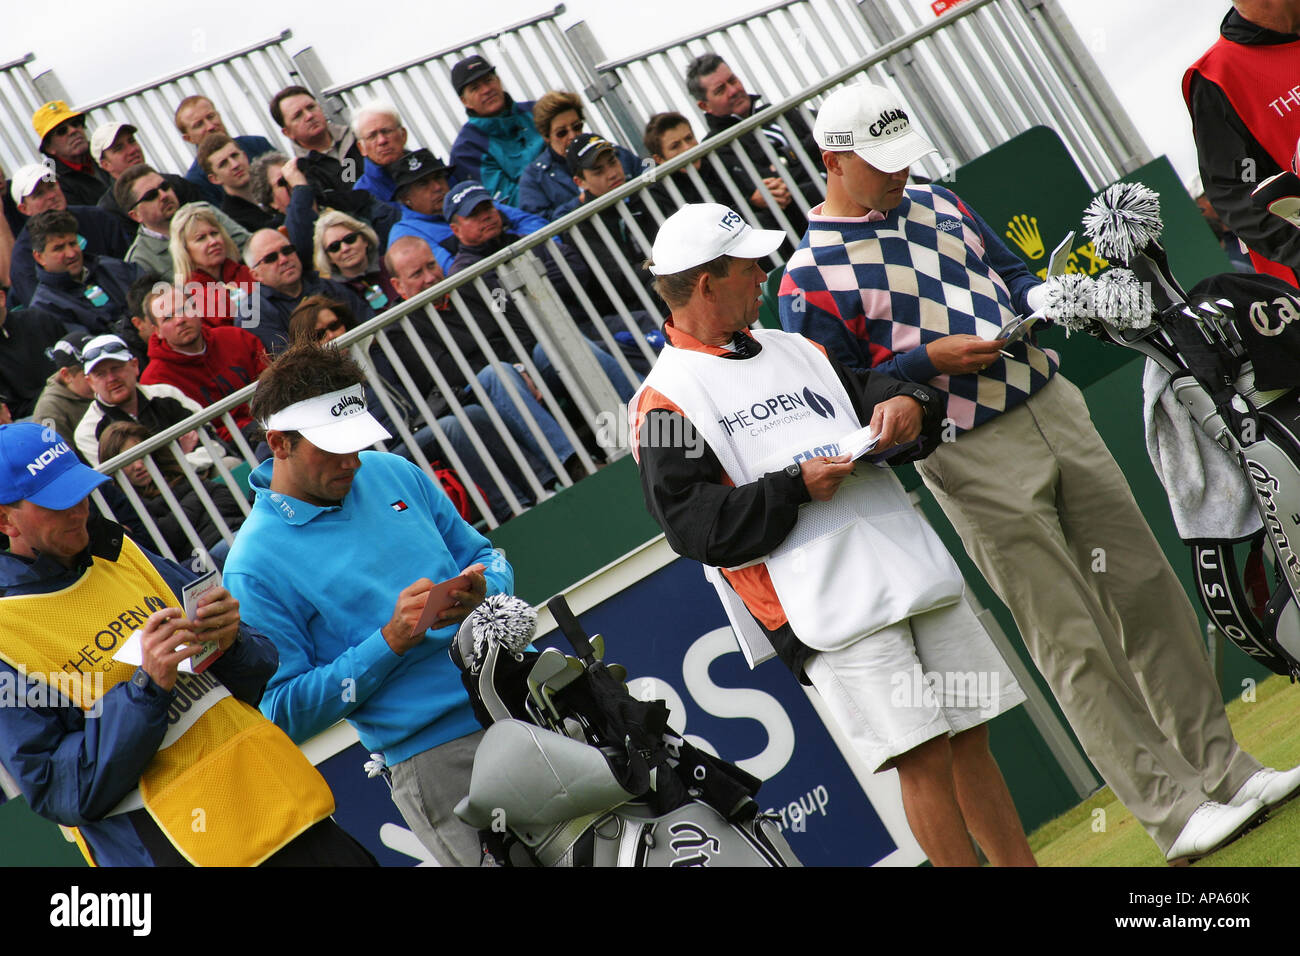 Caddies and golfers checking scorecards Stock Photo